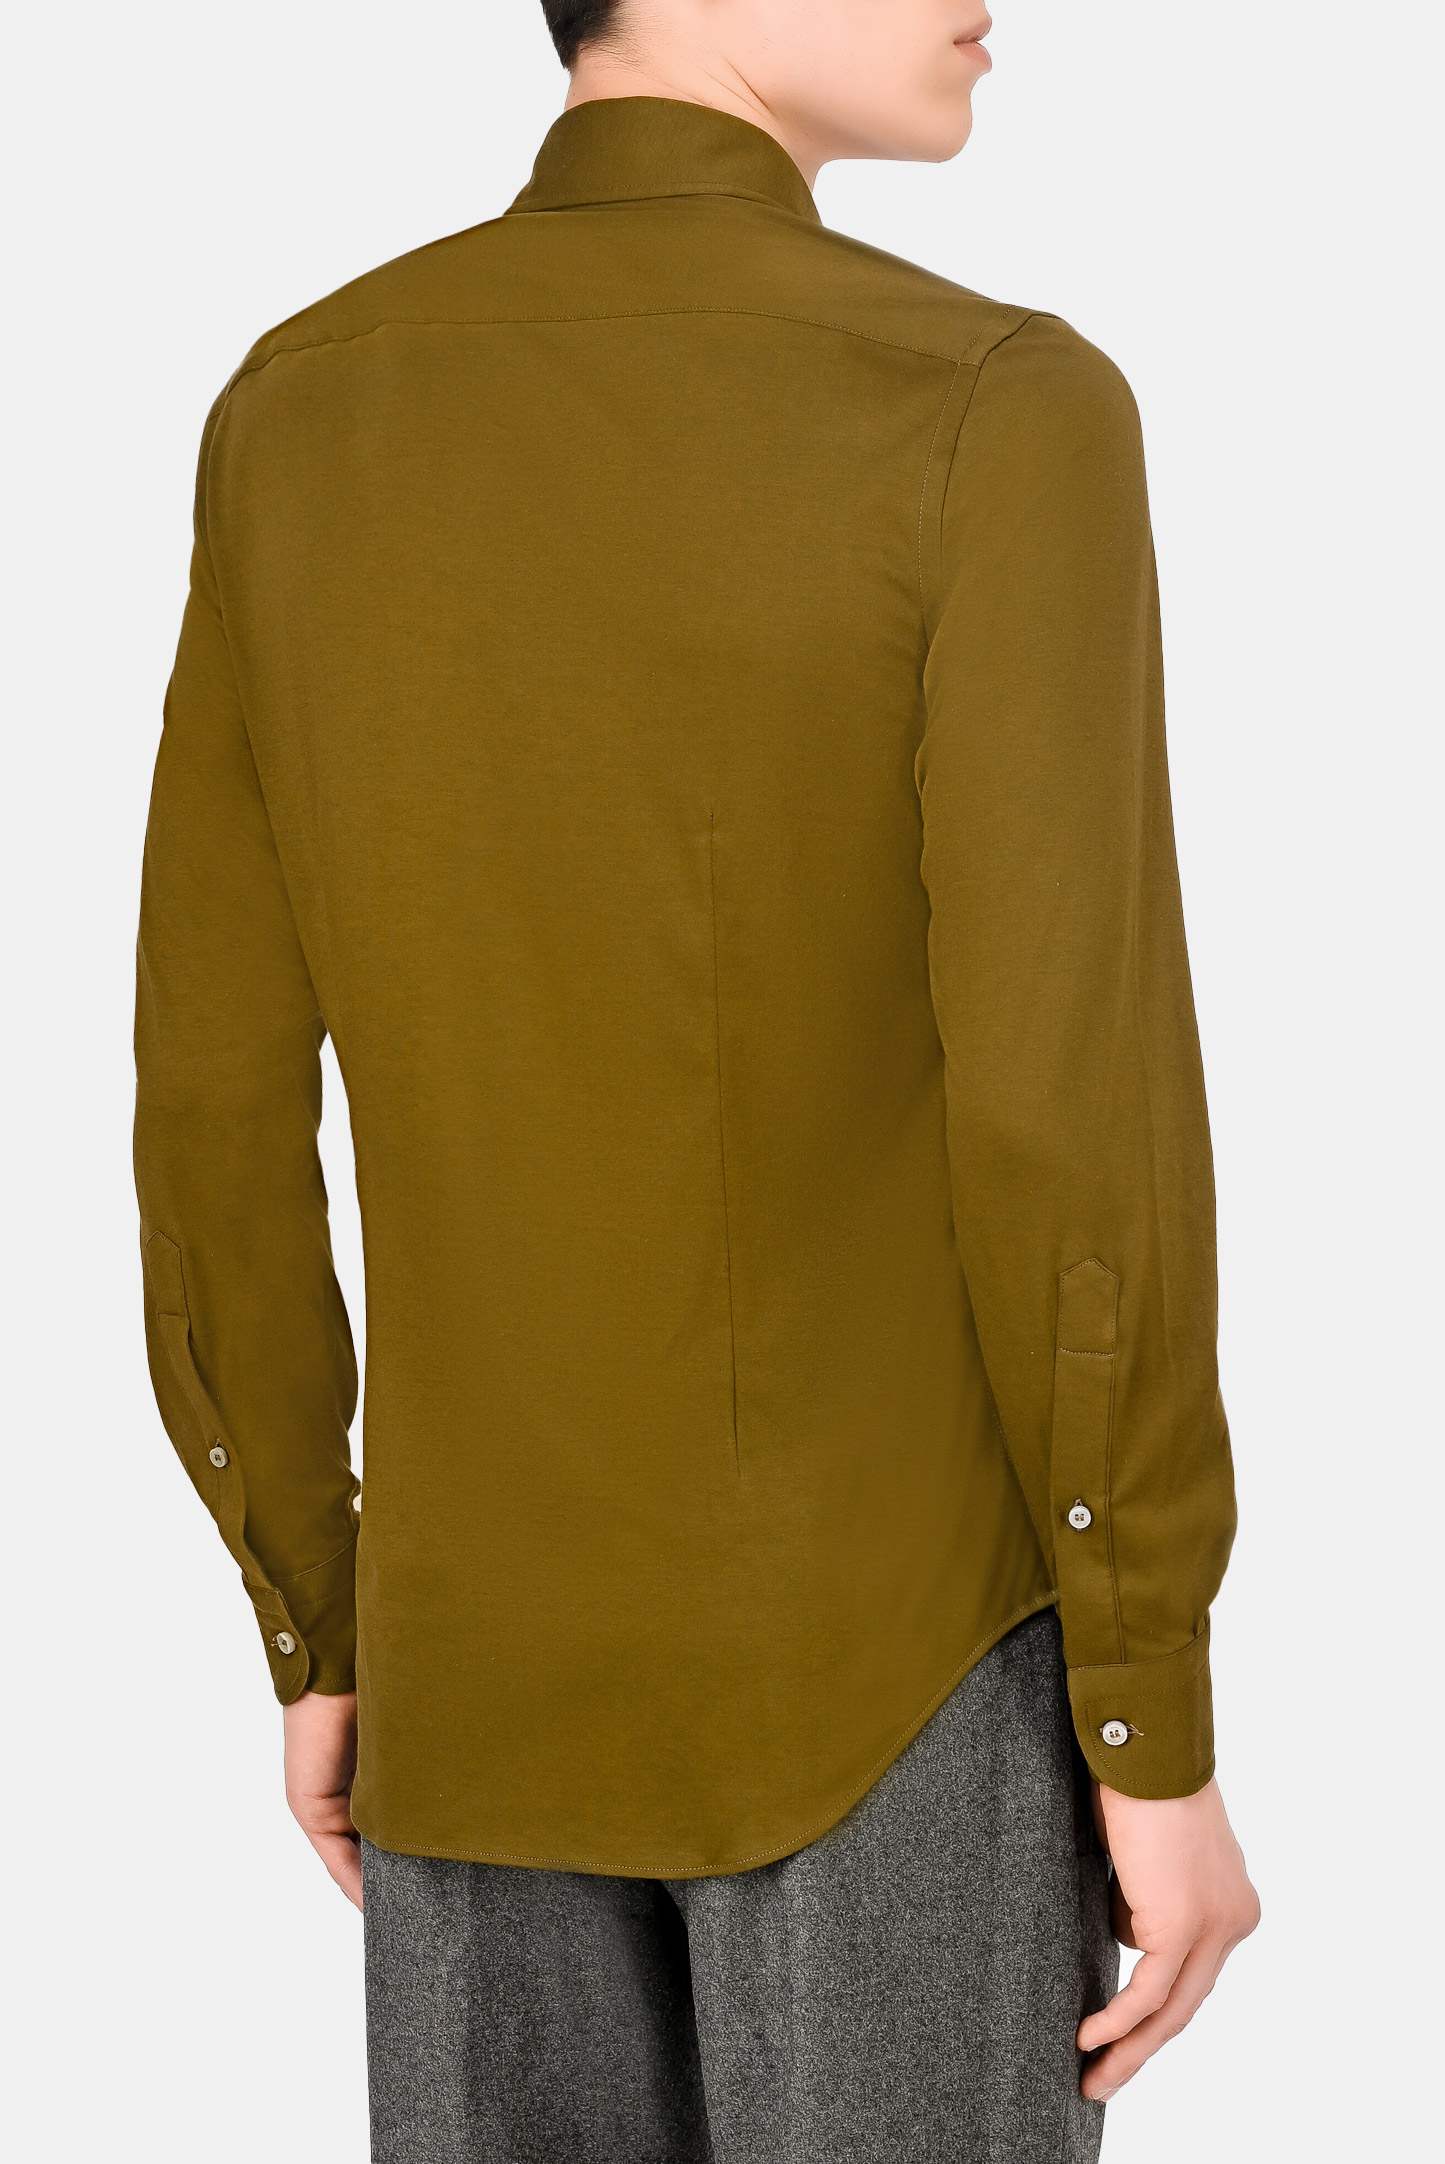 Рубашка LORO PIANA F1-FAL6123, цвет: Зеленый, Мужской